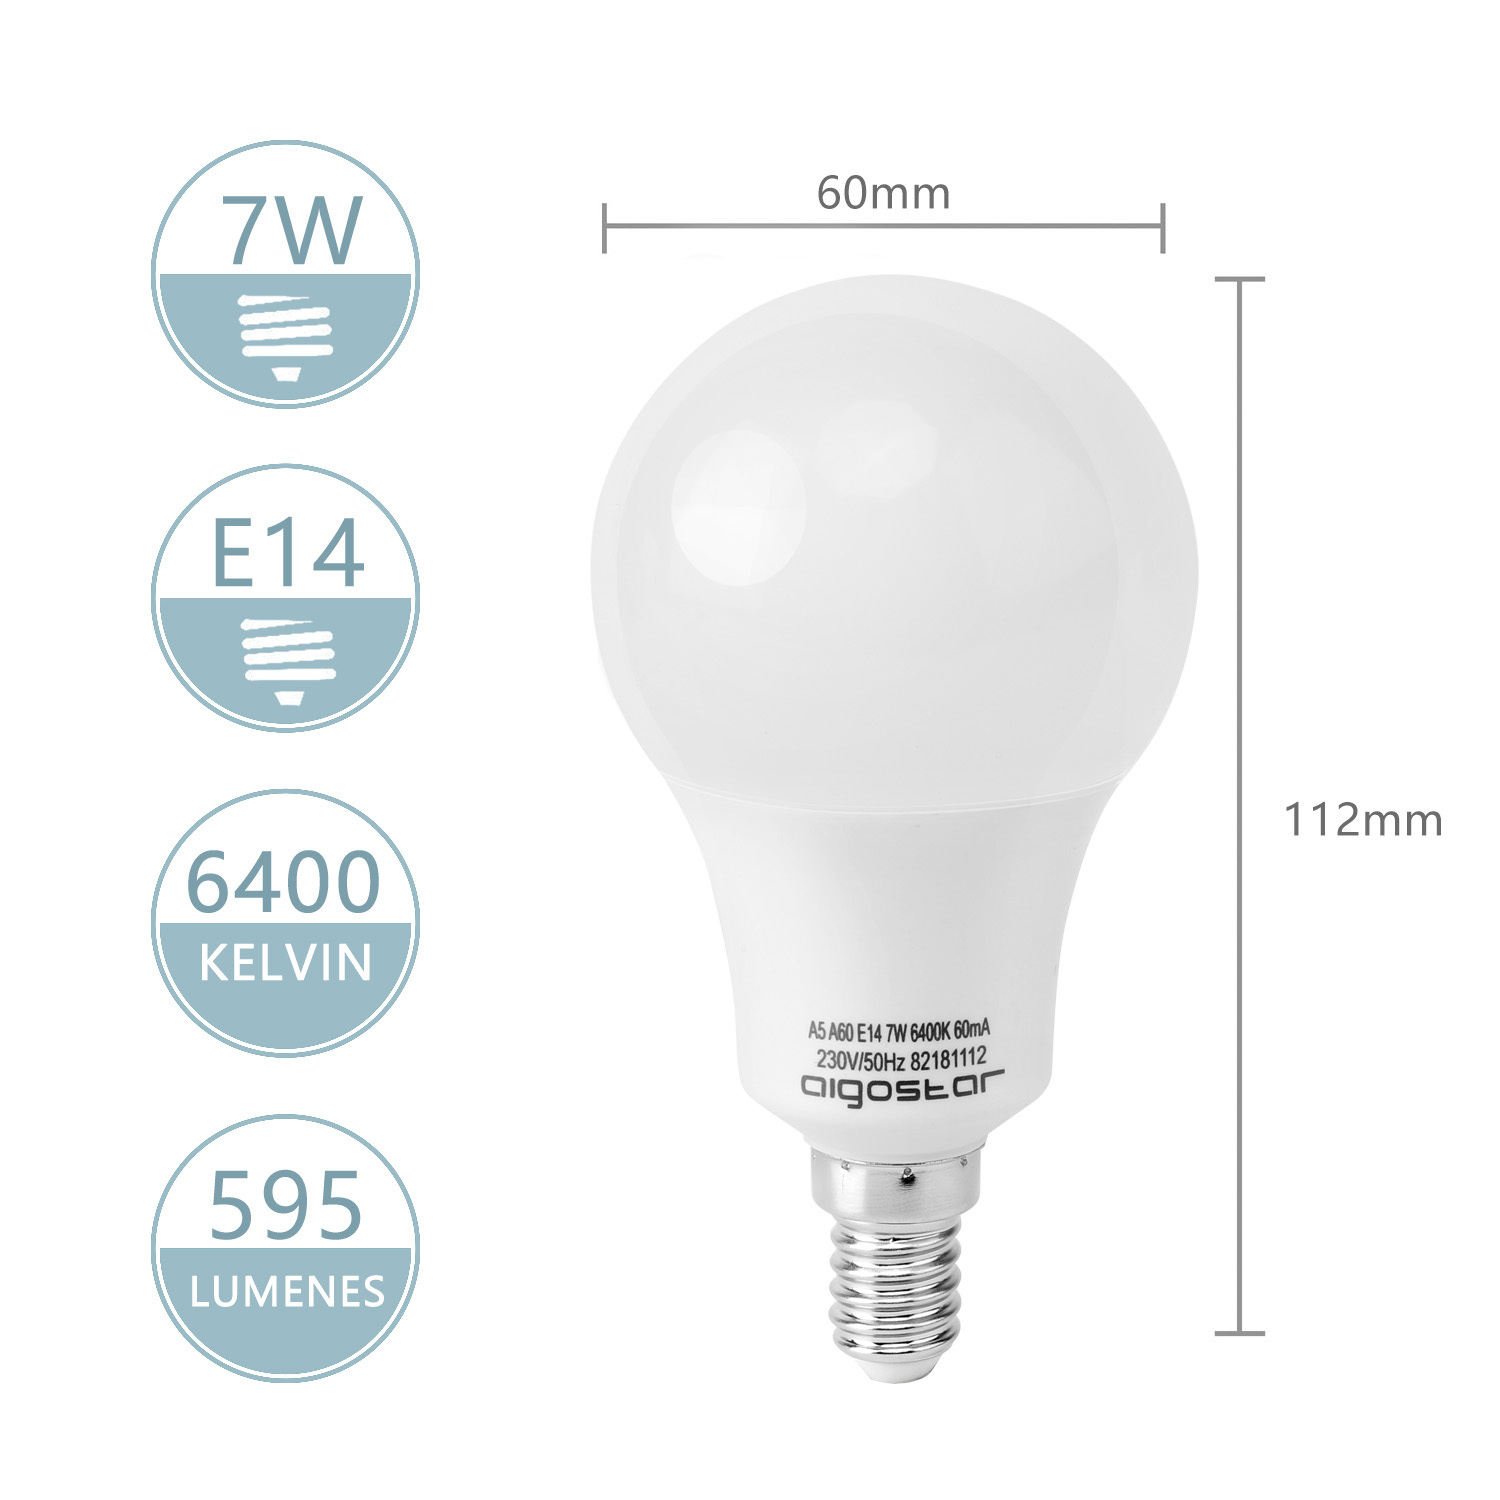 Aigostar - LED Lampe A60 E14, 7W (ersetzt 47W), kaltweißes Licht 6400K, 595 Lumen, Multipack mit 5 Lampen.(10)